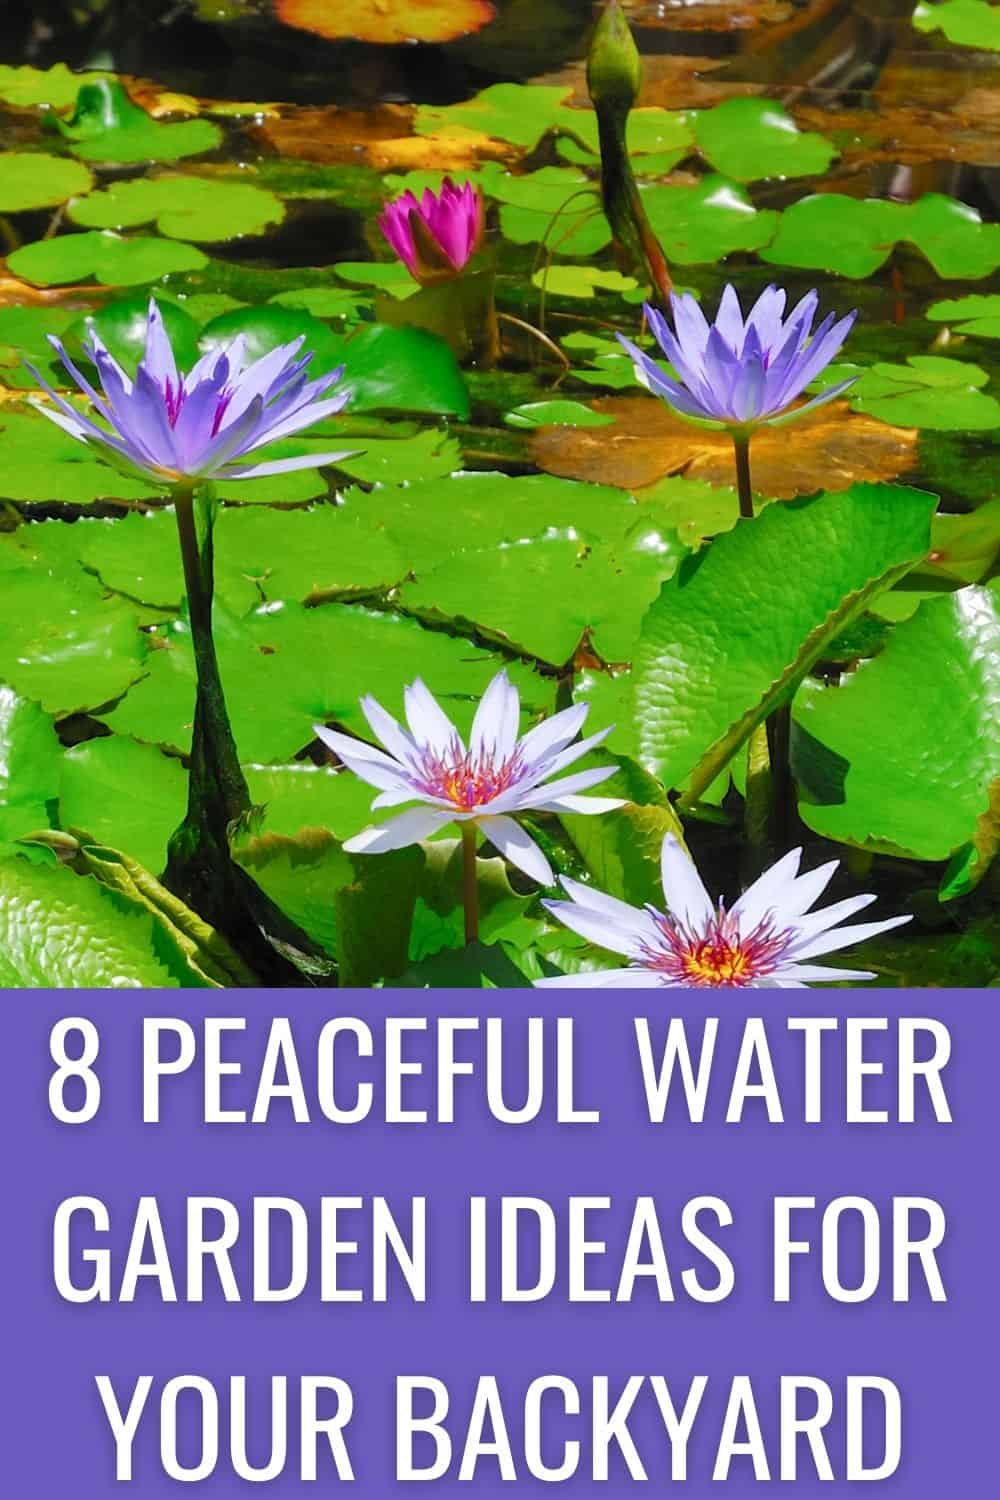 8 peaceful water garden ideas for your backyard